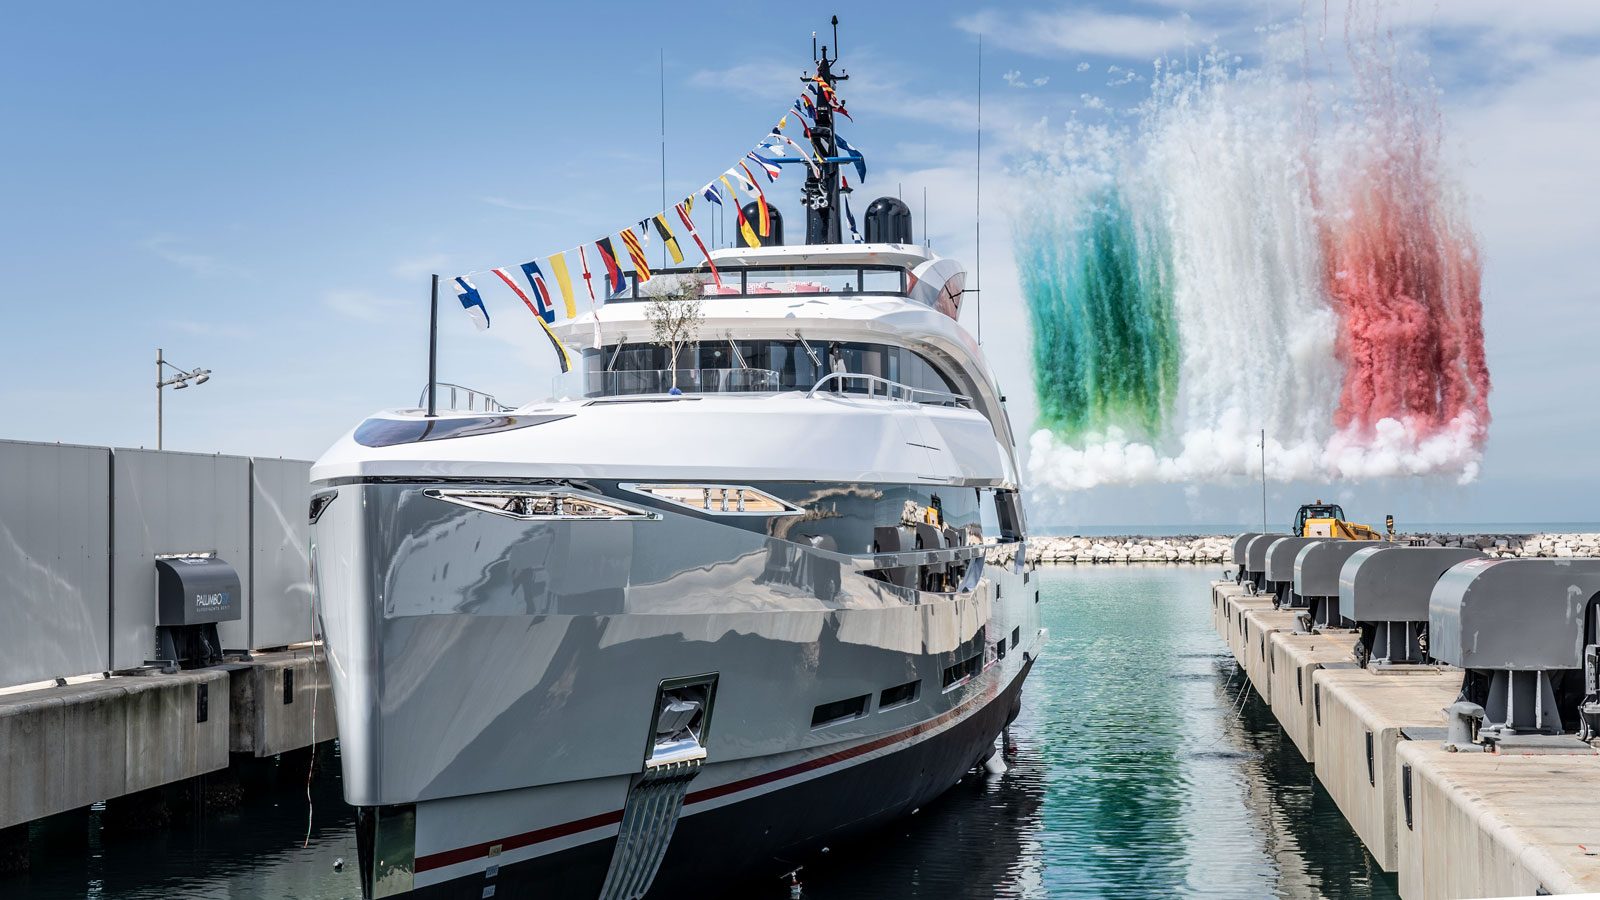 Yate ARIA SF • ISA Yachts • 2022 • Propietario Paolo Scuderi